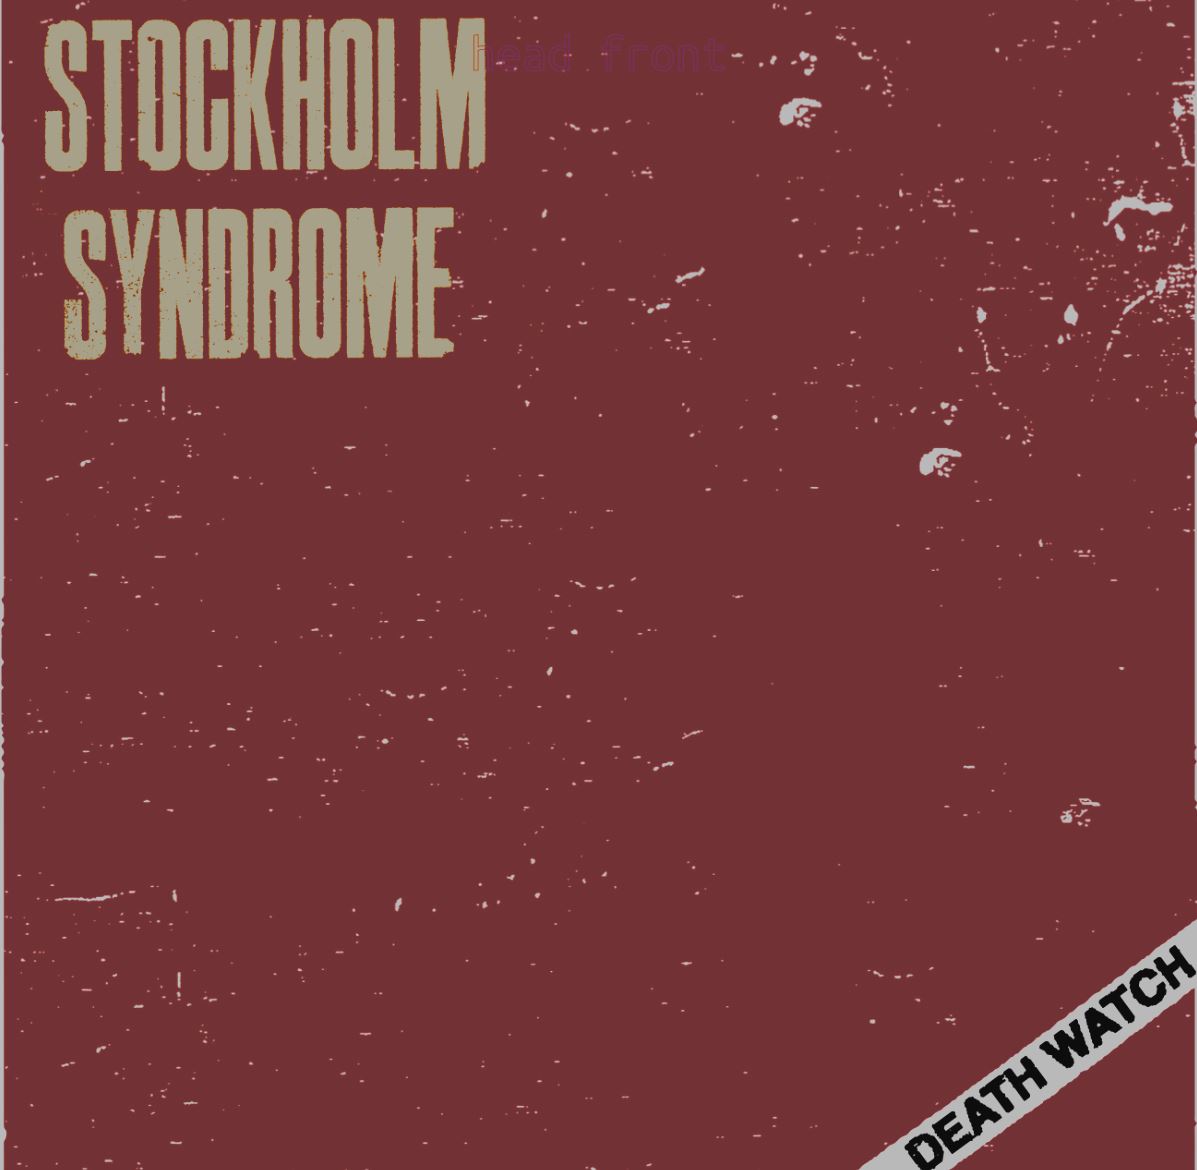 Stockholm Syndrome - Death Watch LP (red vinyl)